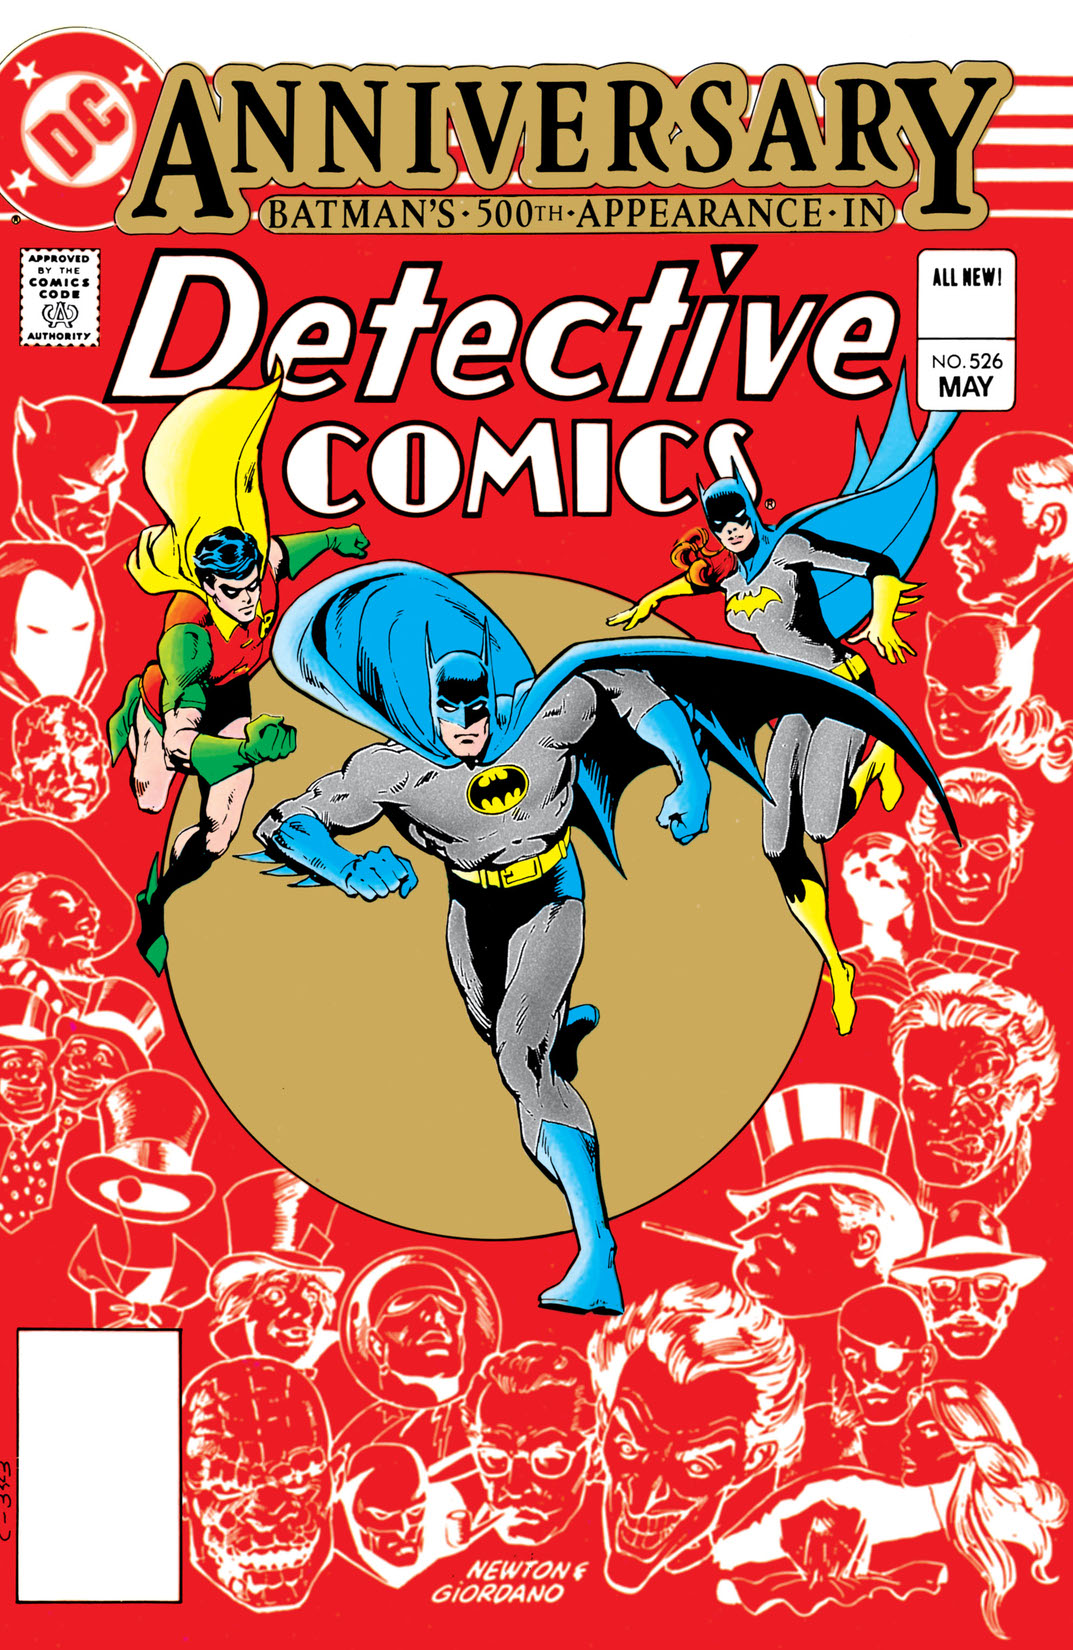 Detective Comics (1937-) #526 preview images